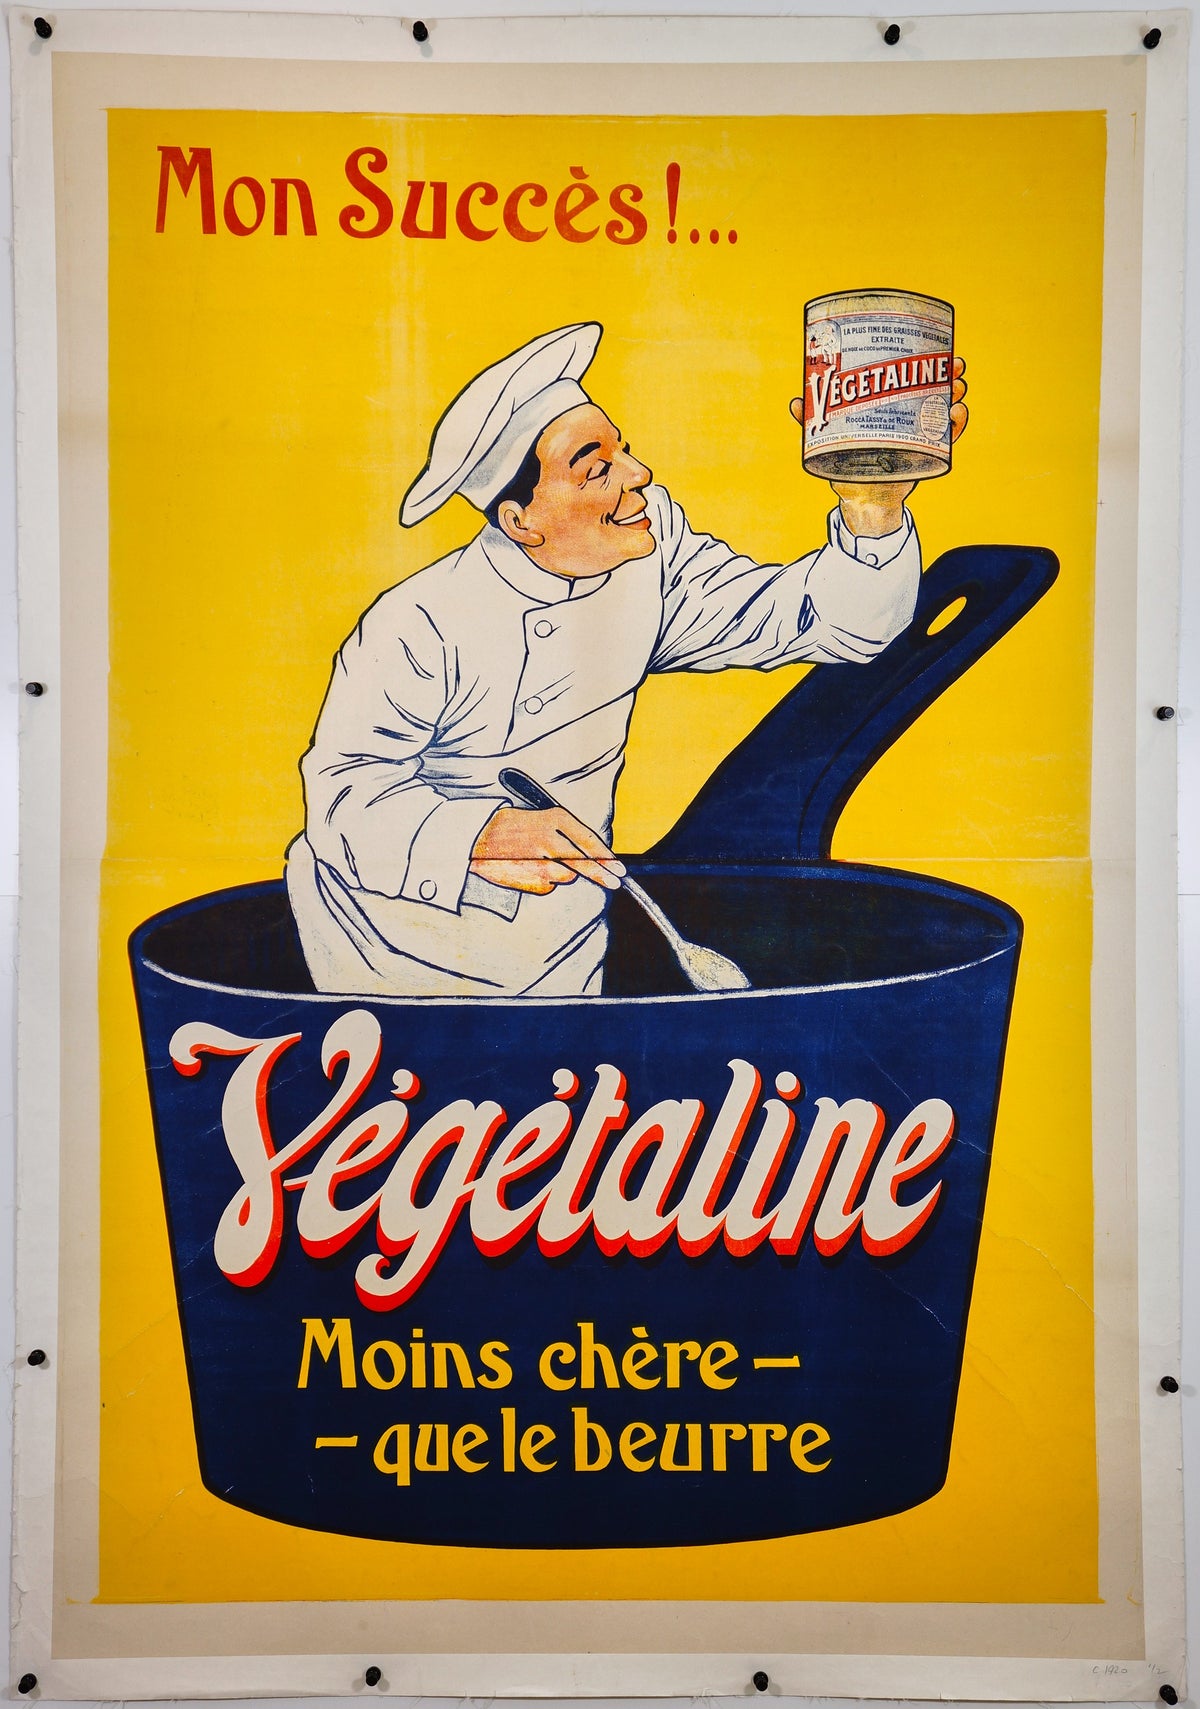 Vegetaline - Chef in Pot - Authentic Vintage Poster